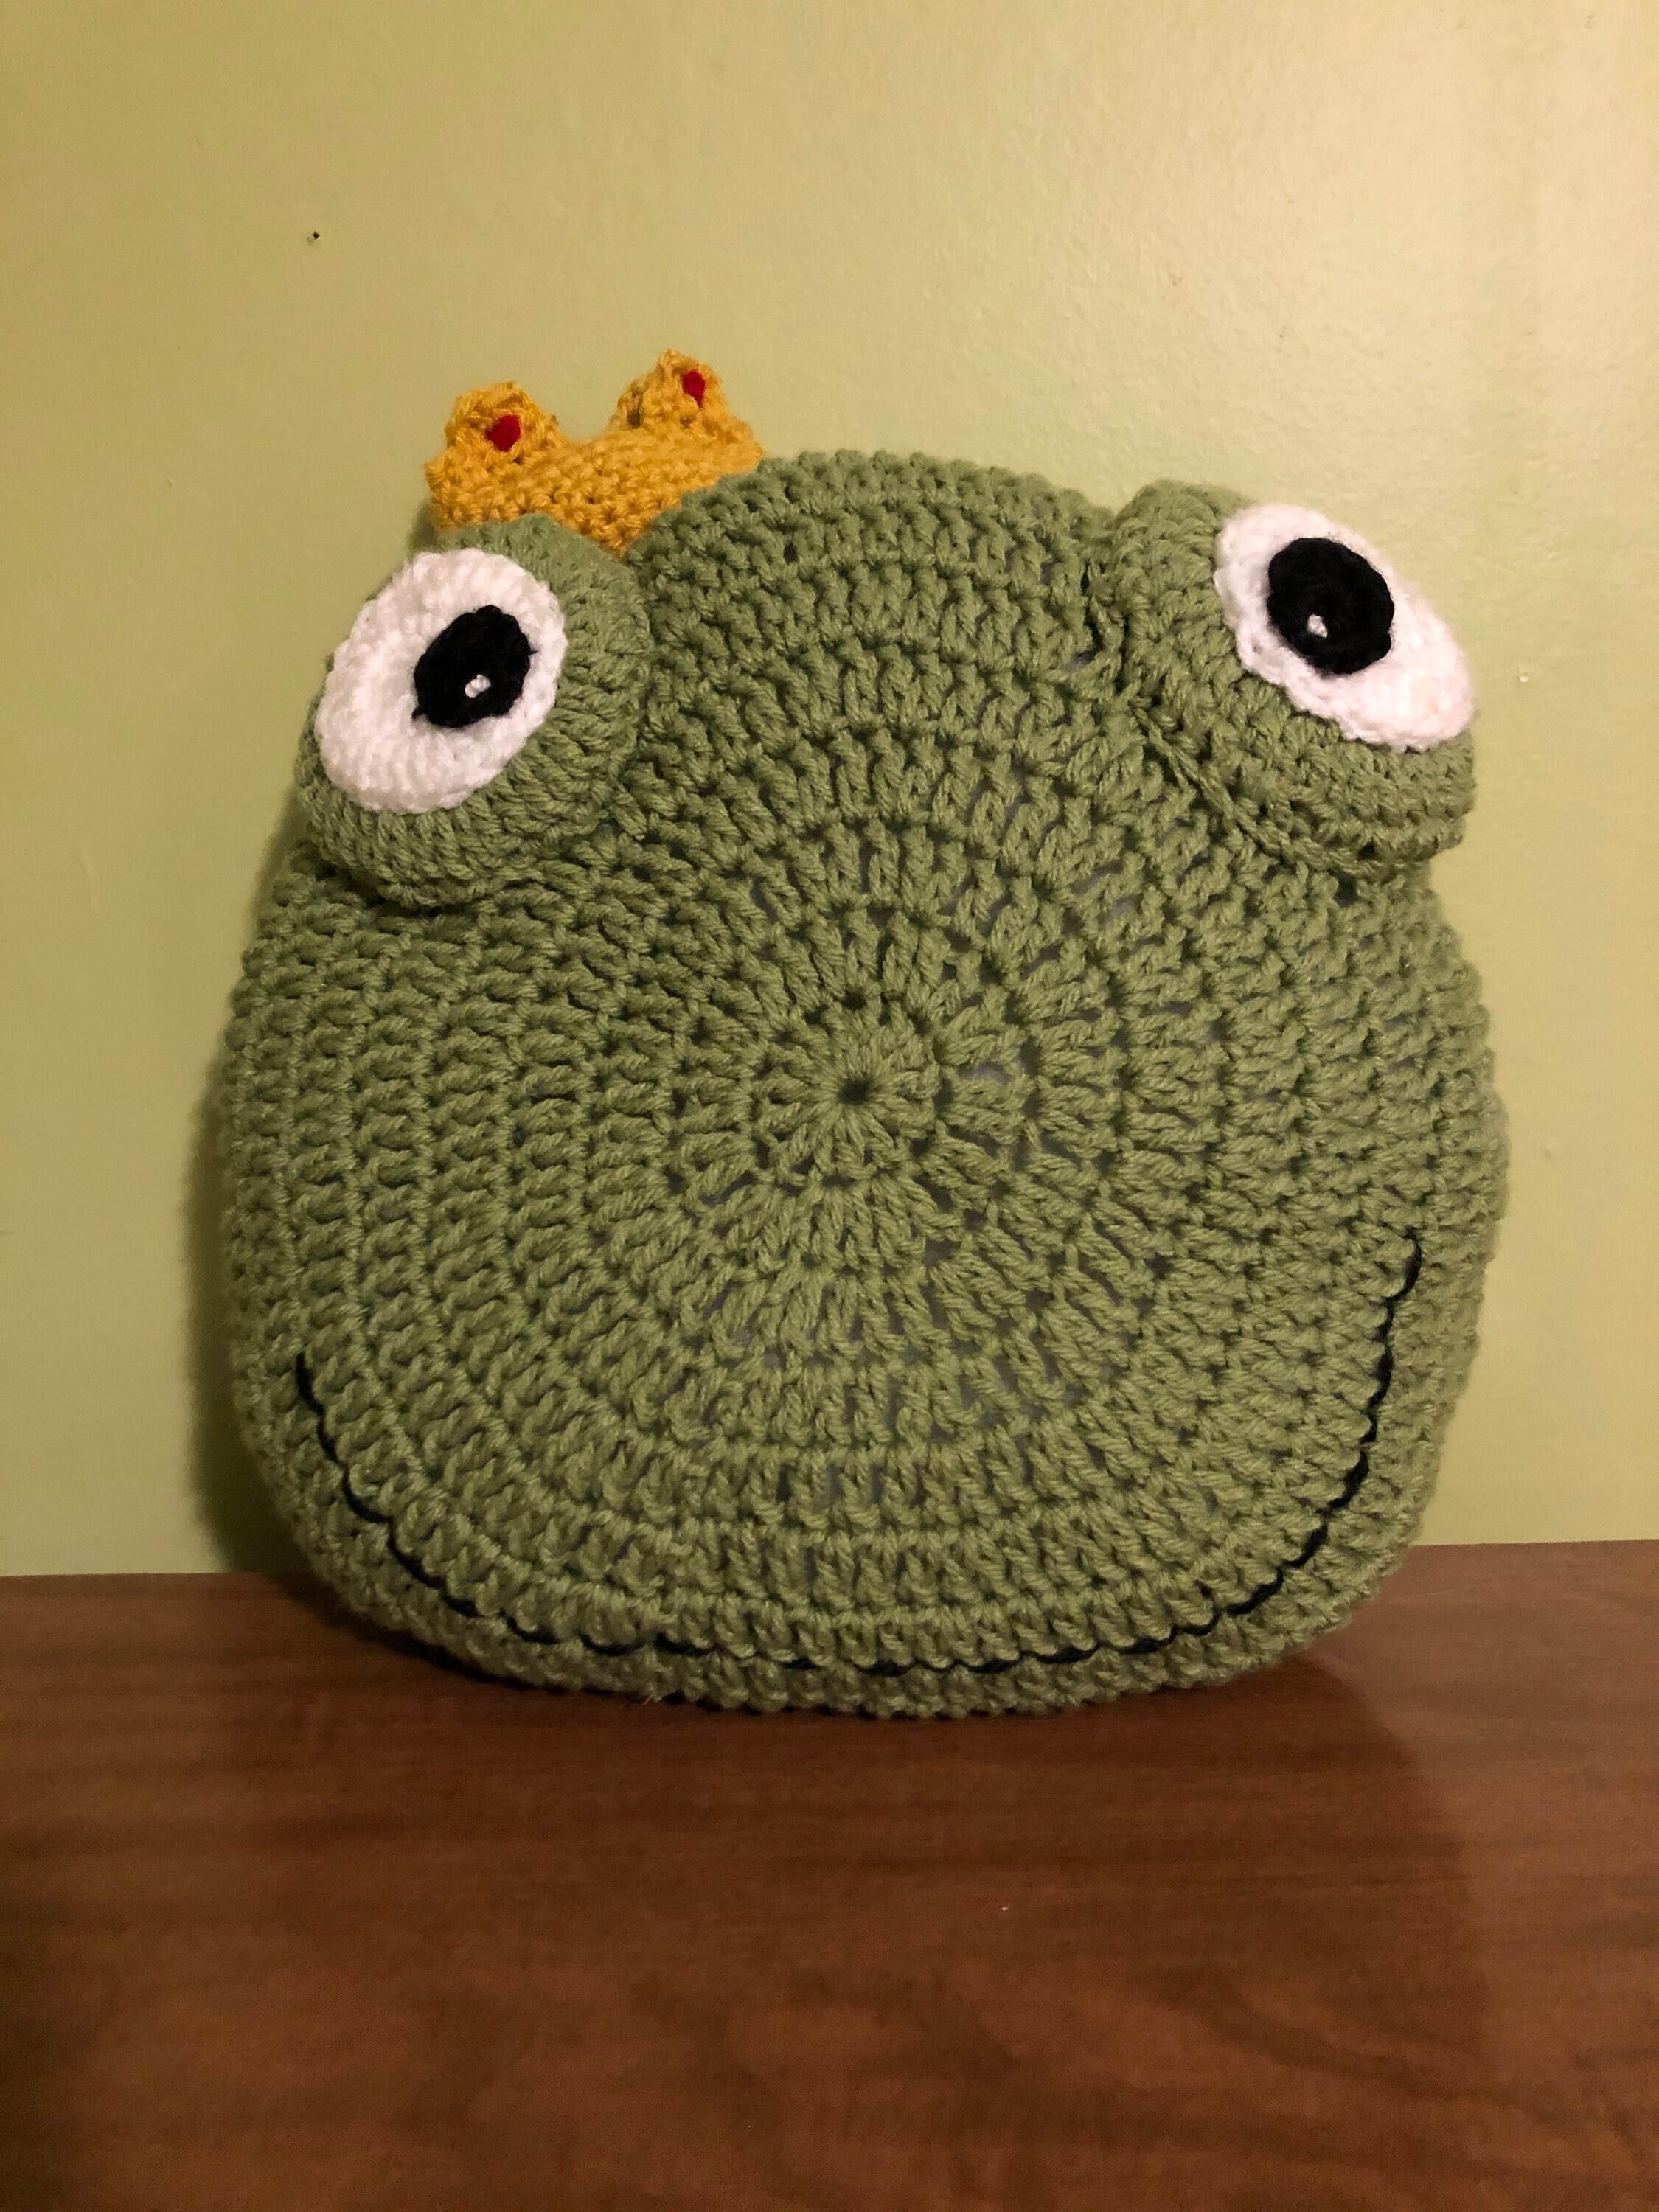 Mr Frog Pillow 